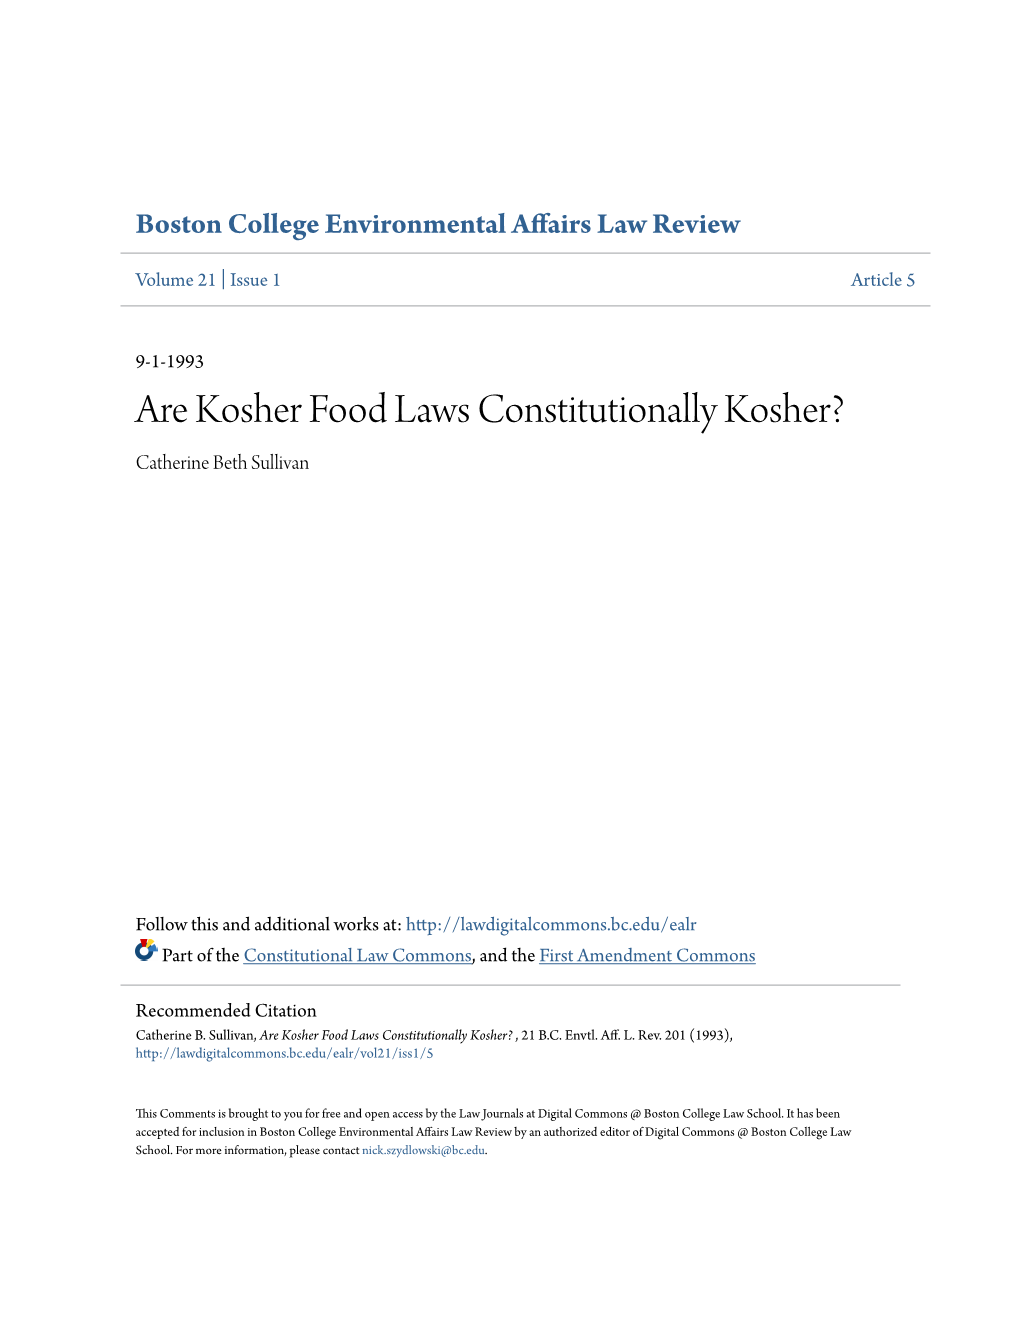 Are Kosher Food Laws Constitutionally Kosher? Catherine Beth Sullivan